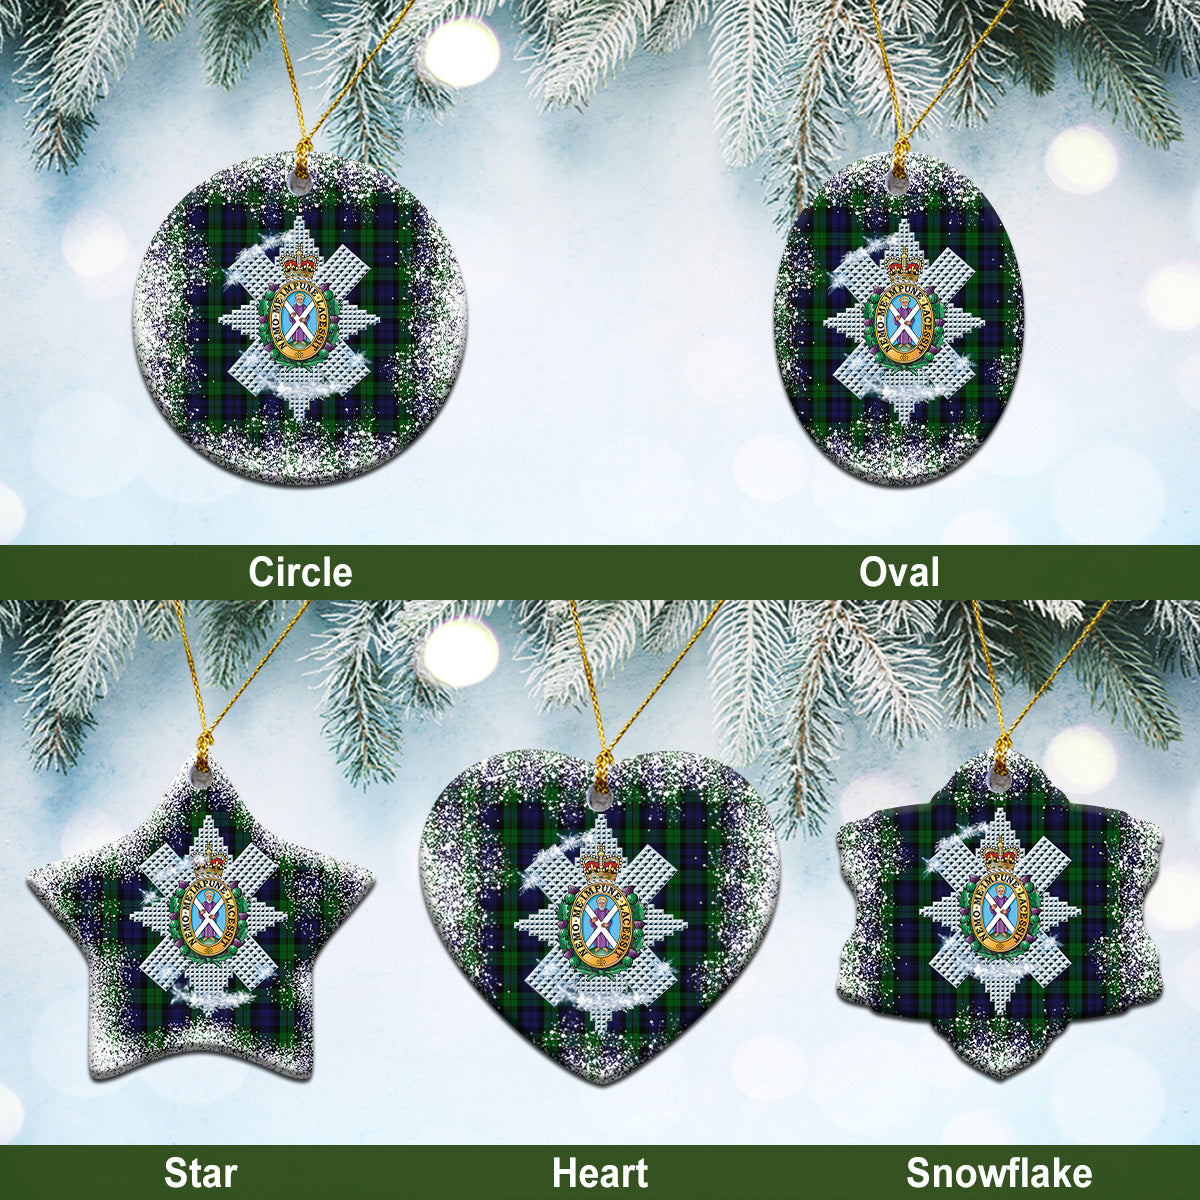 Black Watch Tartan Christmas Ceramic Ornament - Snow Style